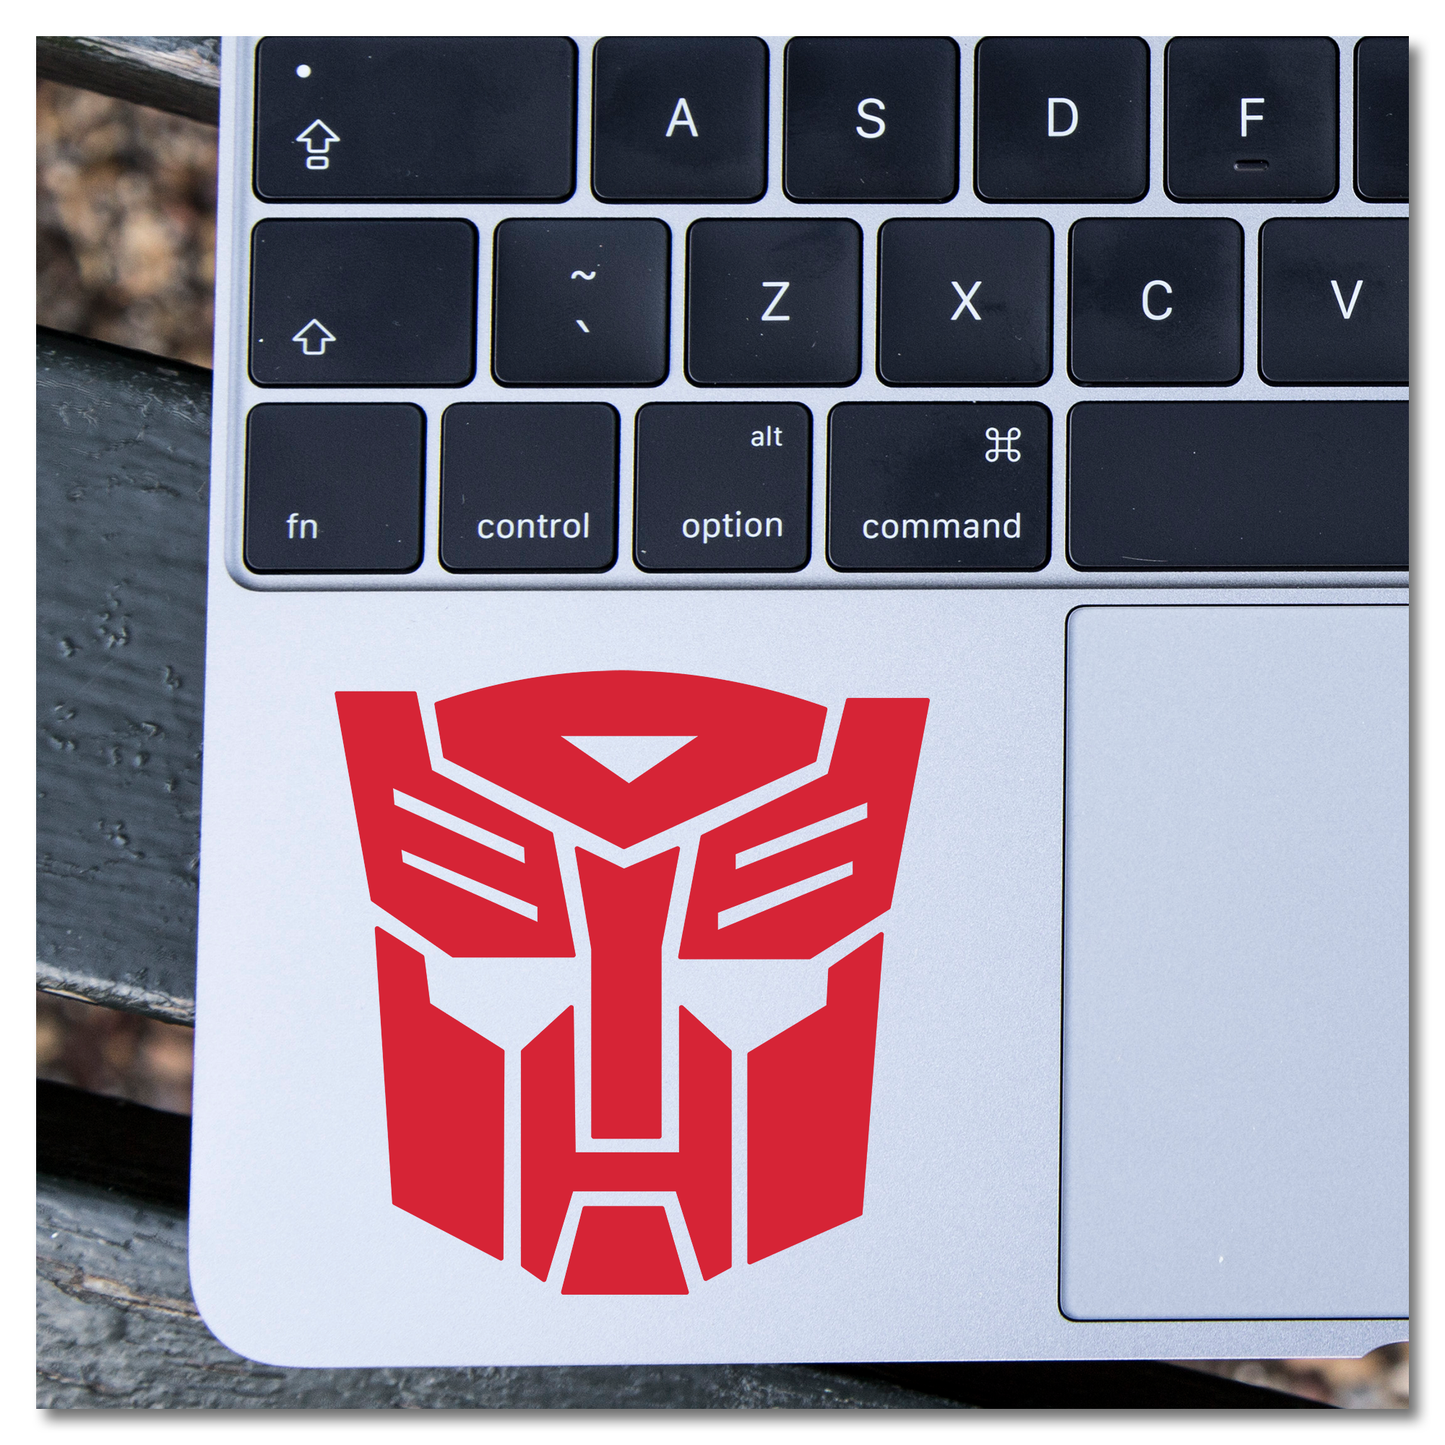 Transformers Autobots Vinyl Decal Sticker